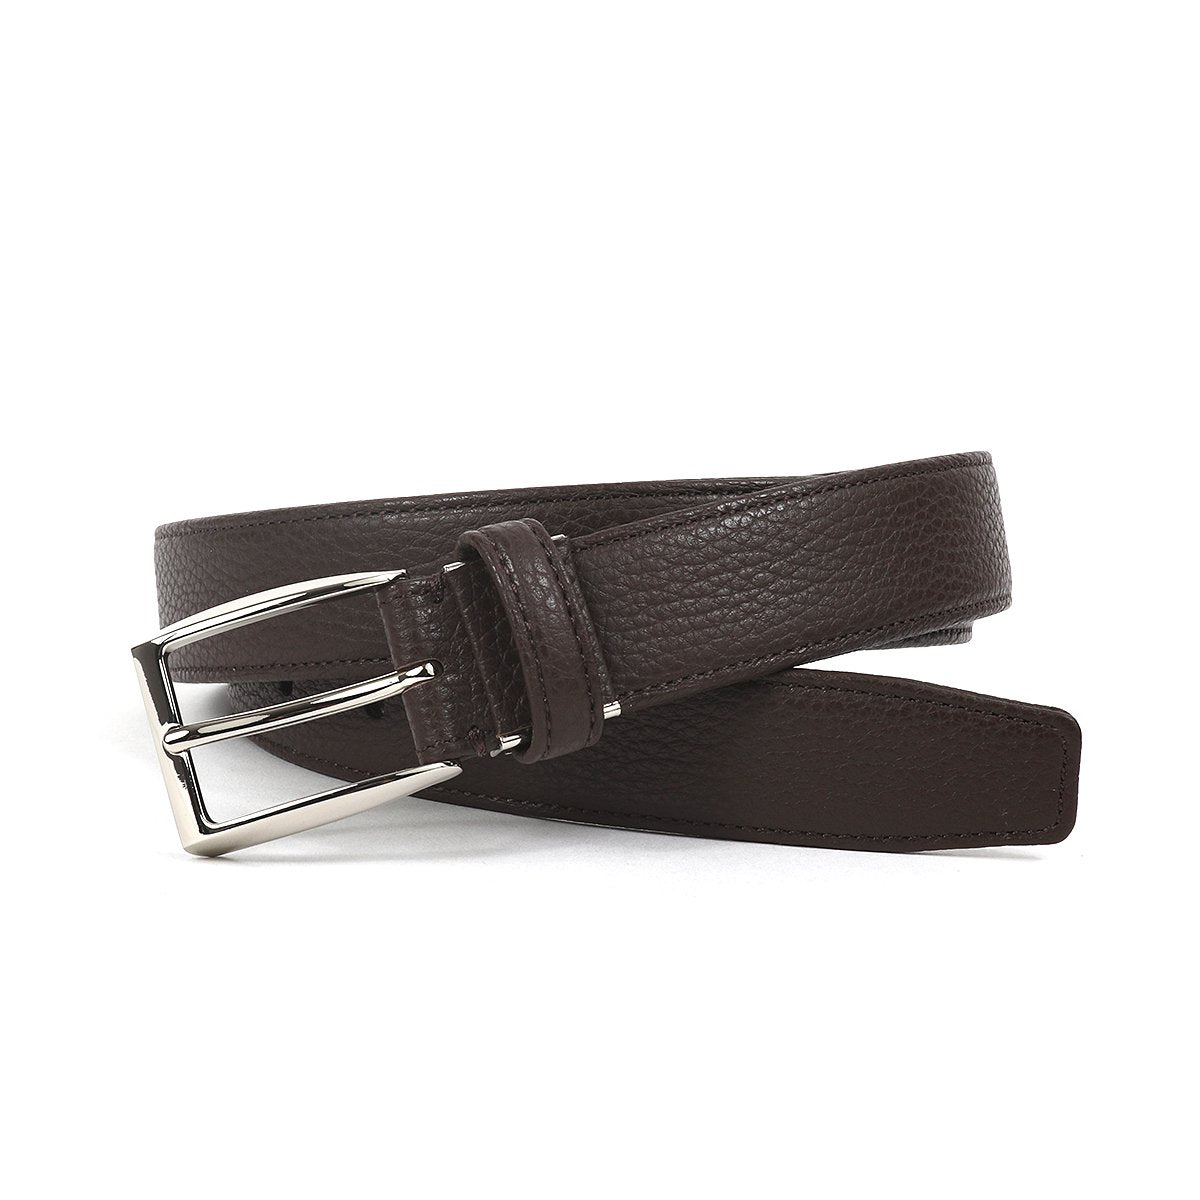 Japanese Leather Belt 30mm Shrink Adria Italian Leather Belt